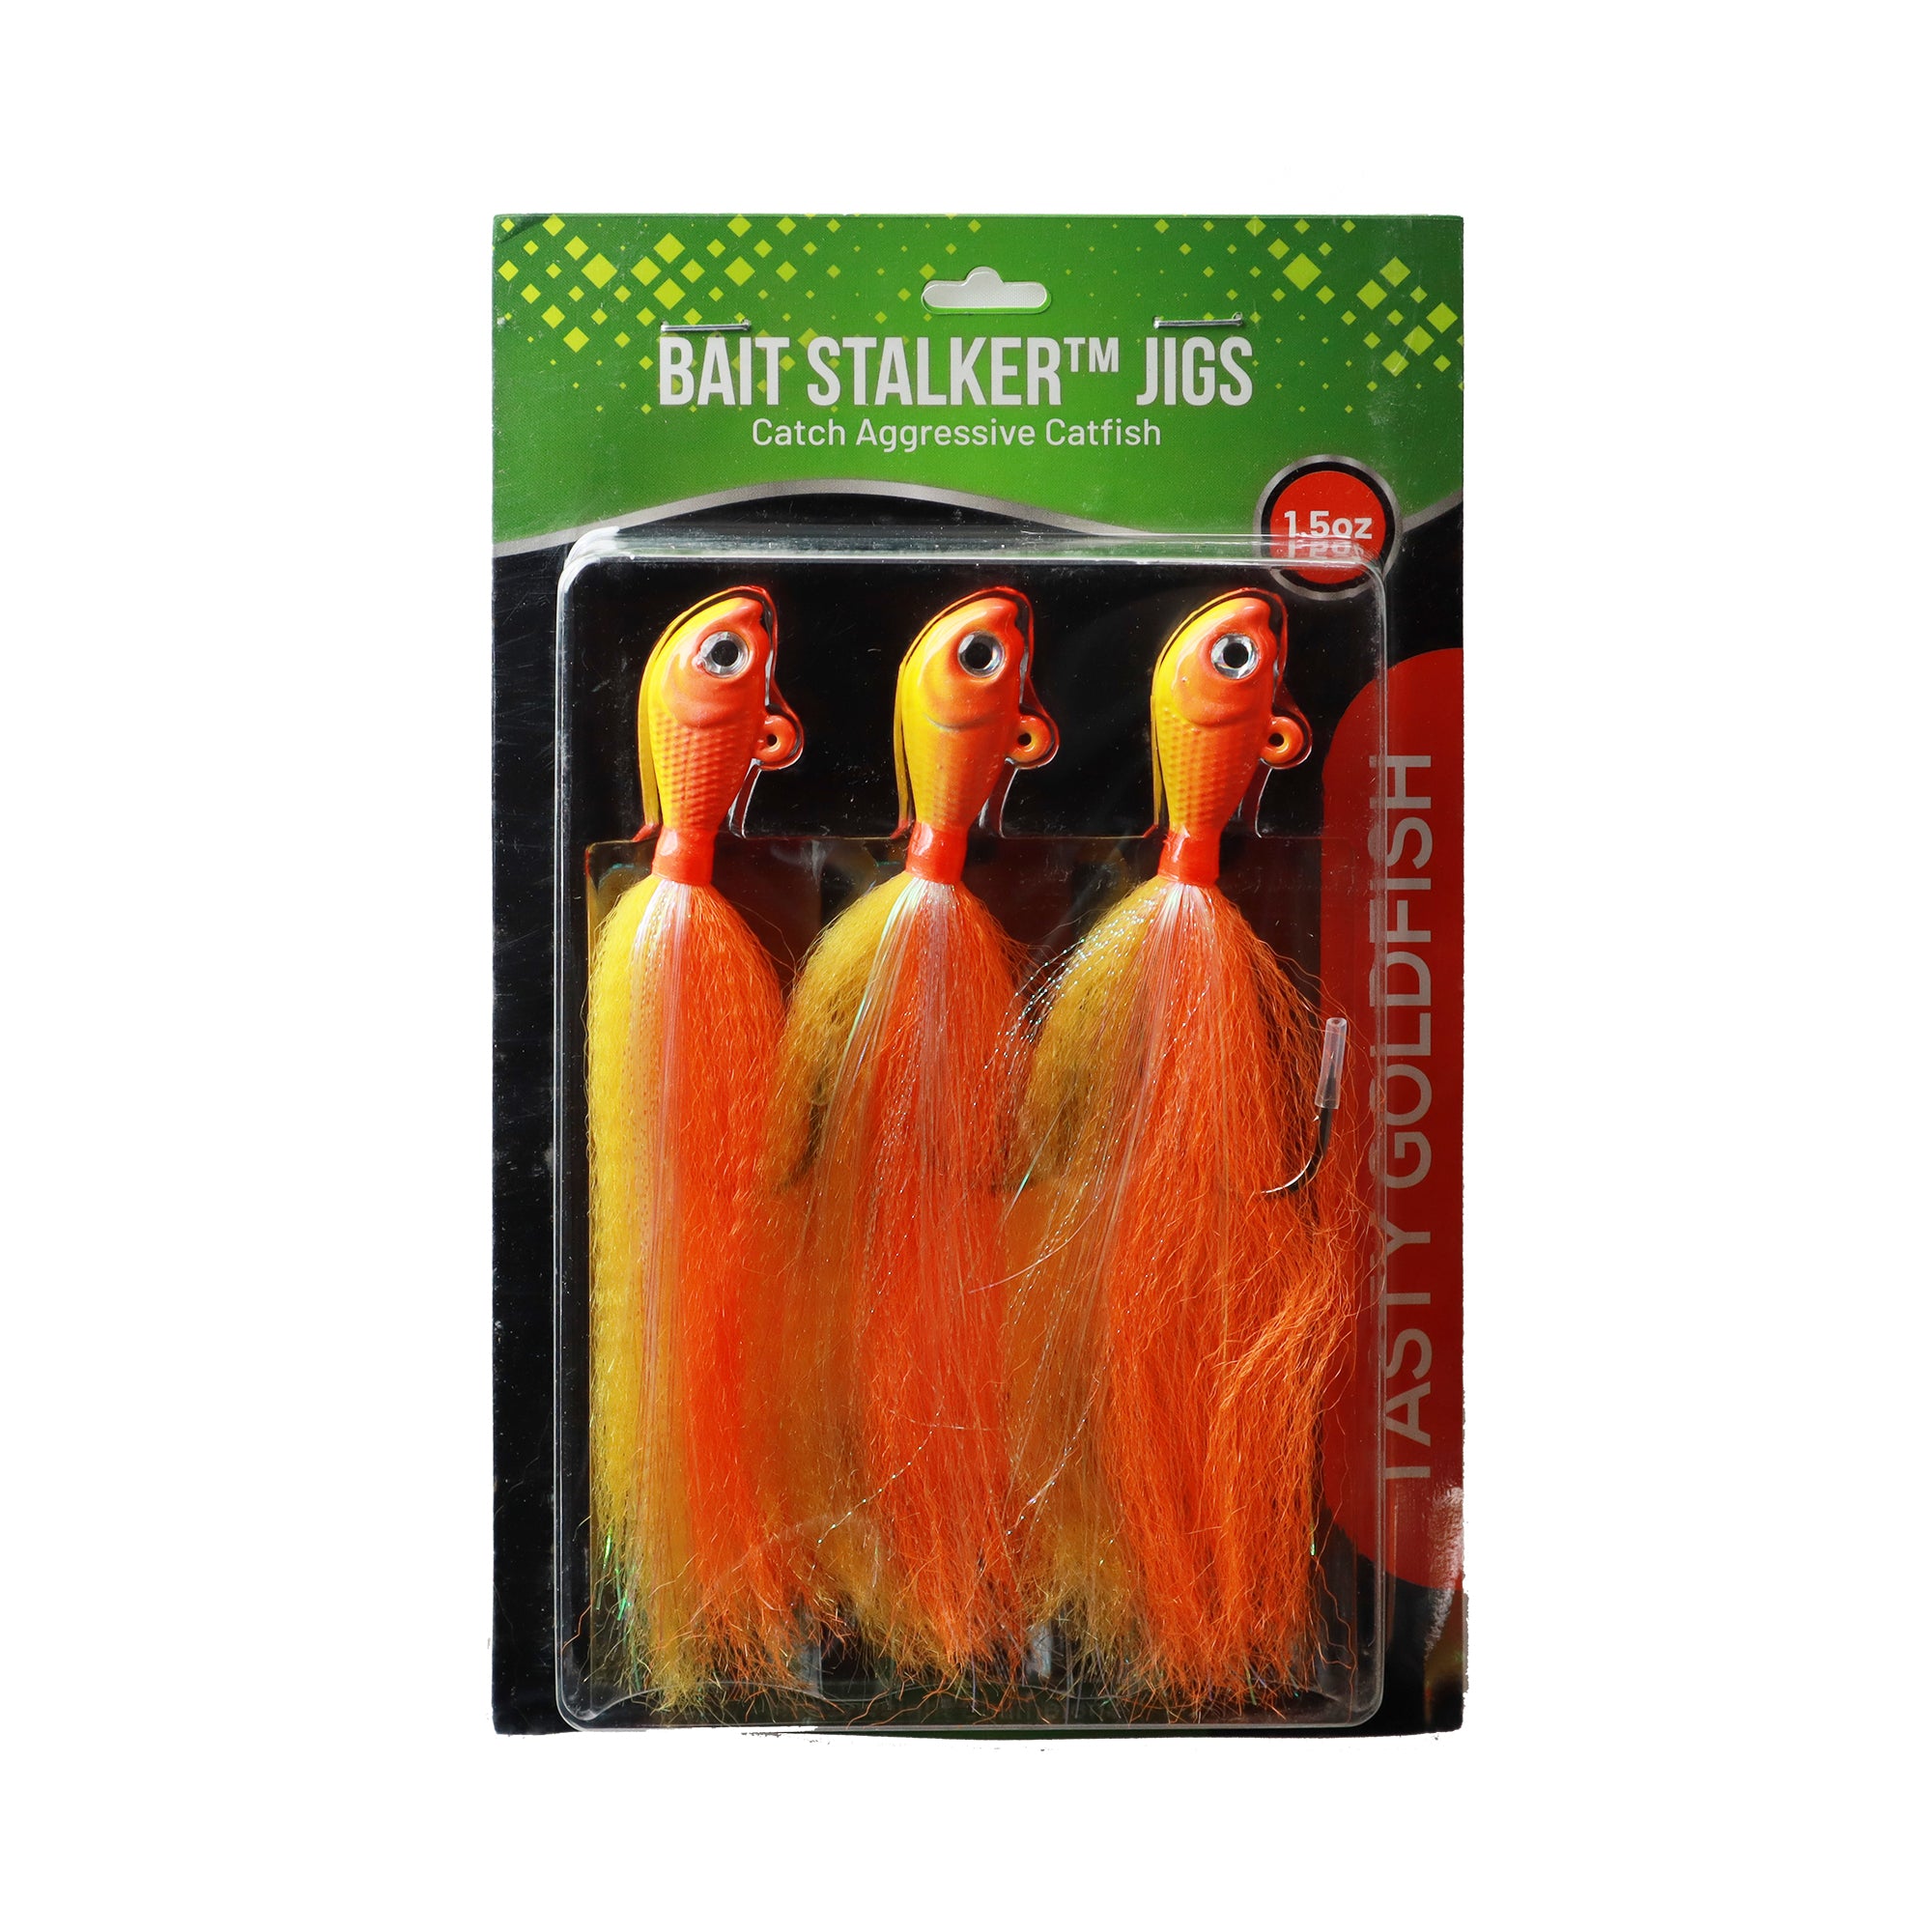 Bait Stalker Jigs: Artificial Jigs for Catching Catfish, 3-Pack